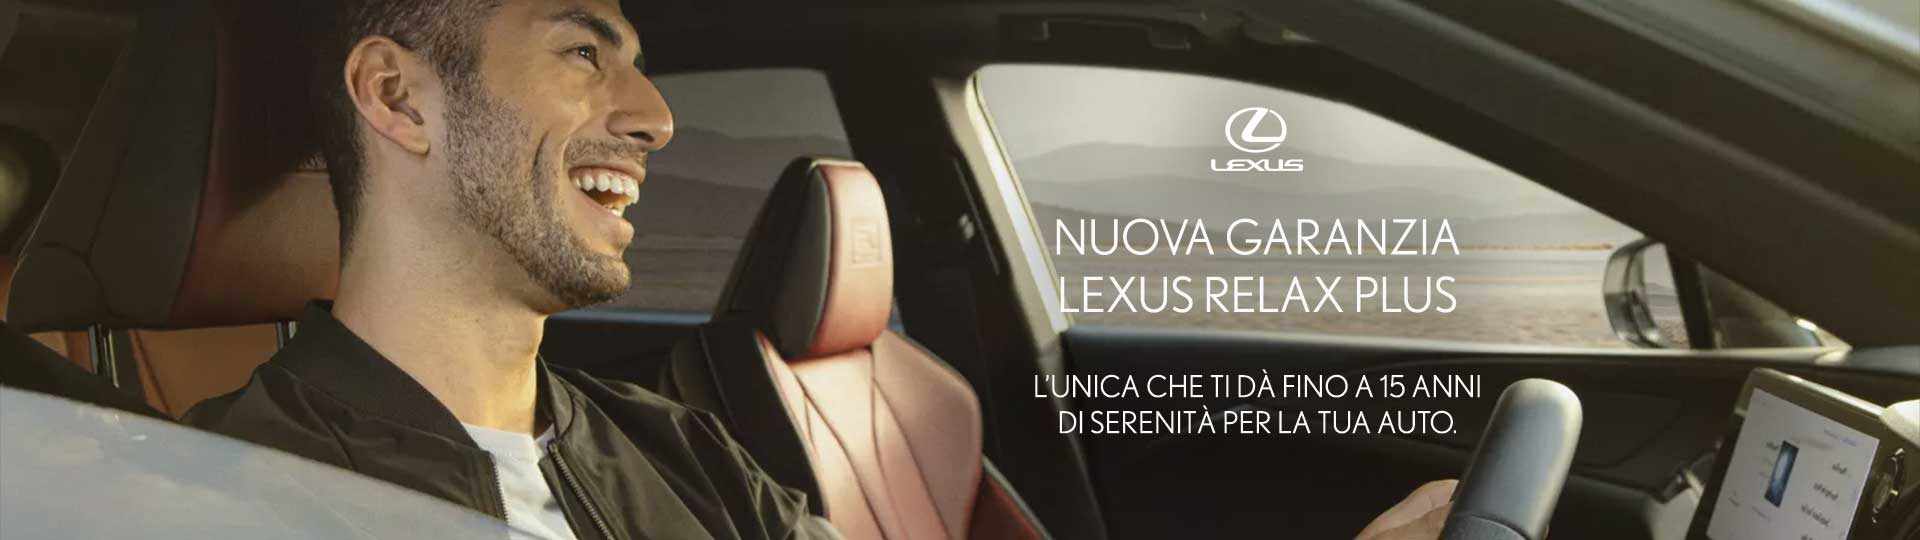 Header_Lexus_Garanzia_Relax_Plus_Luglio_2022.jpg